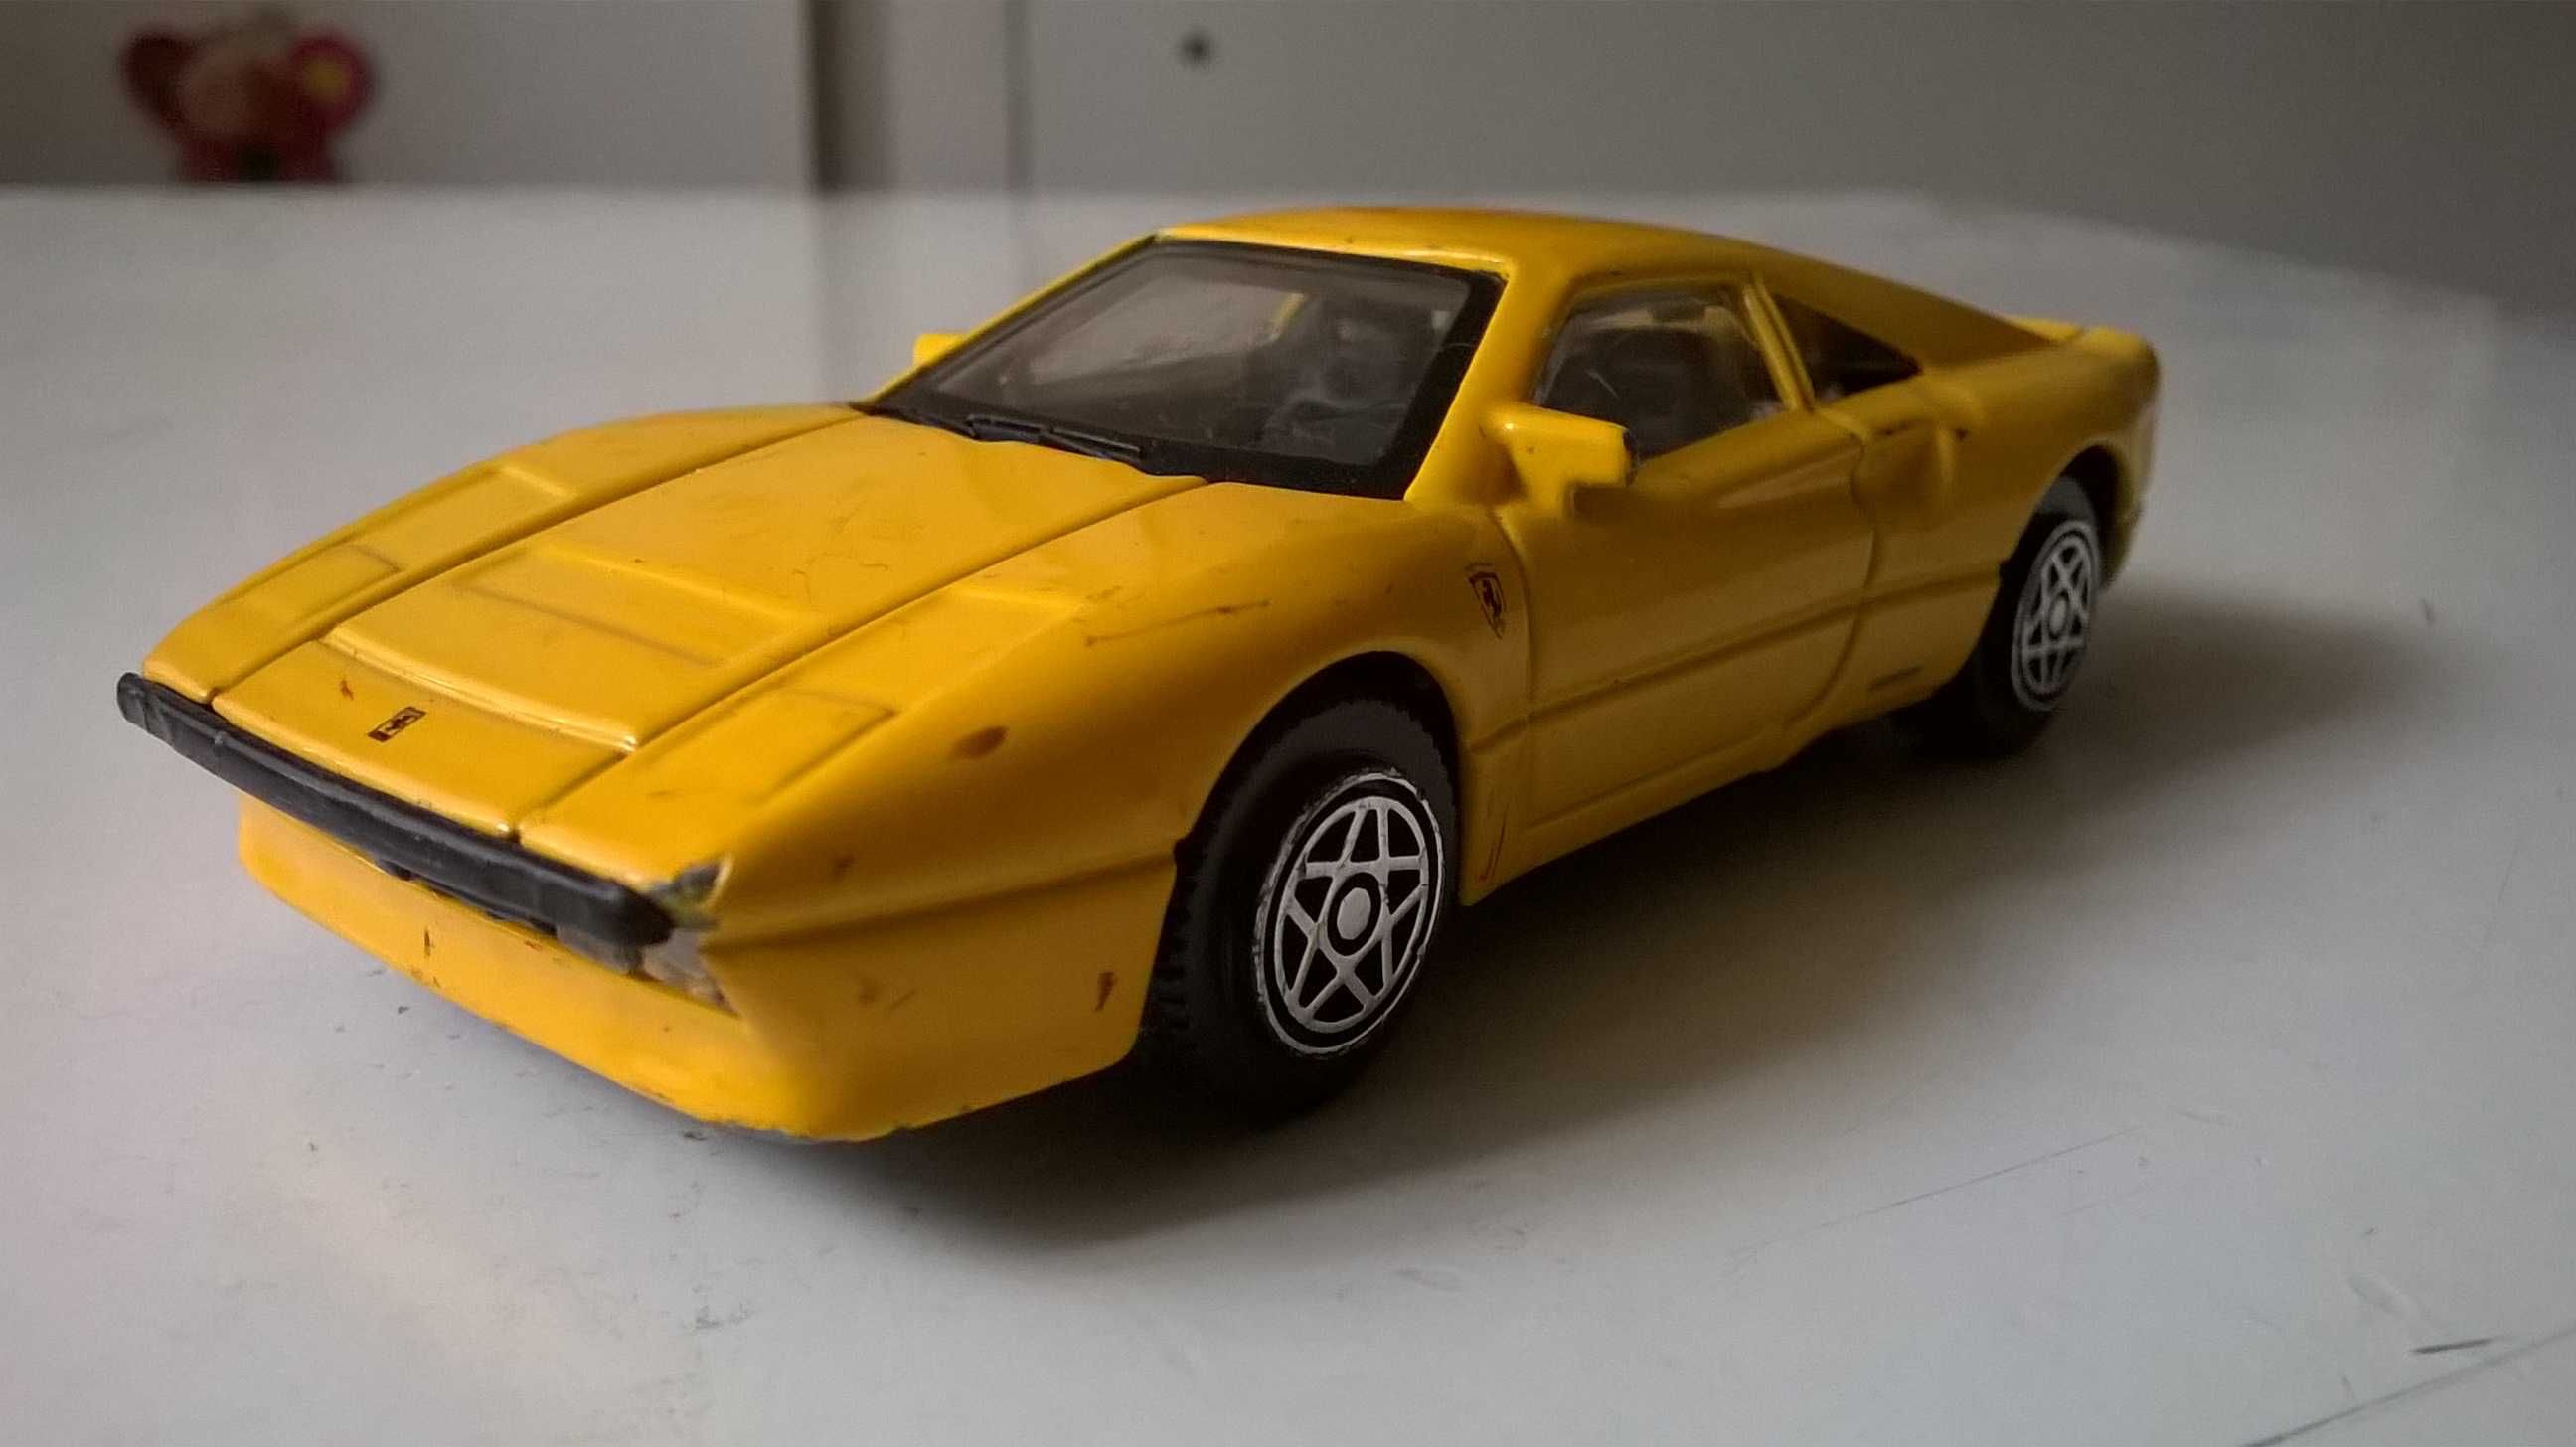 FERRARI GTO, skala 1:43, model metalowo-plastikowy, Bburago